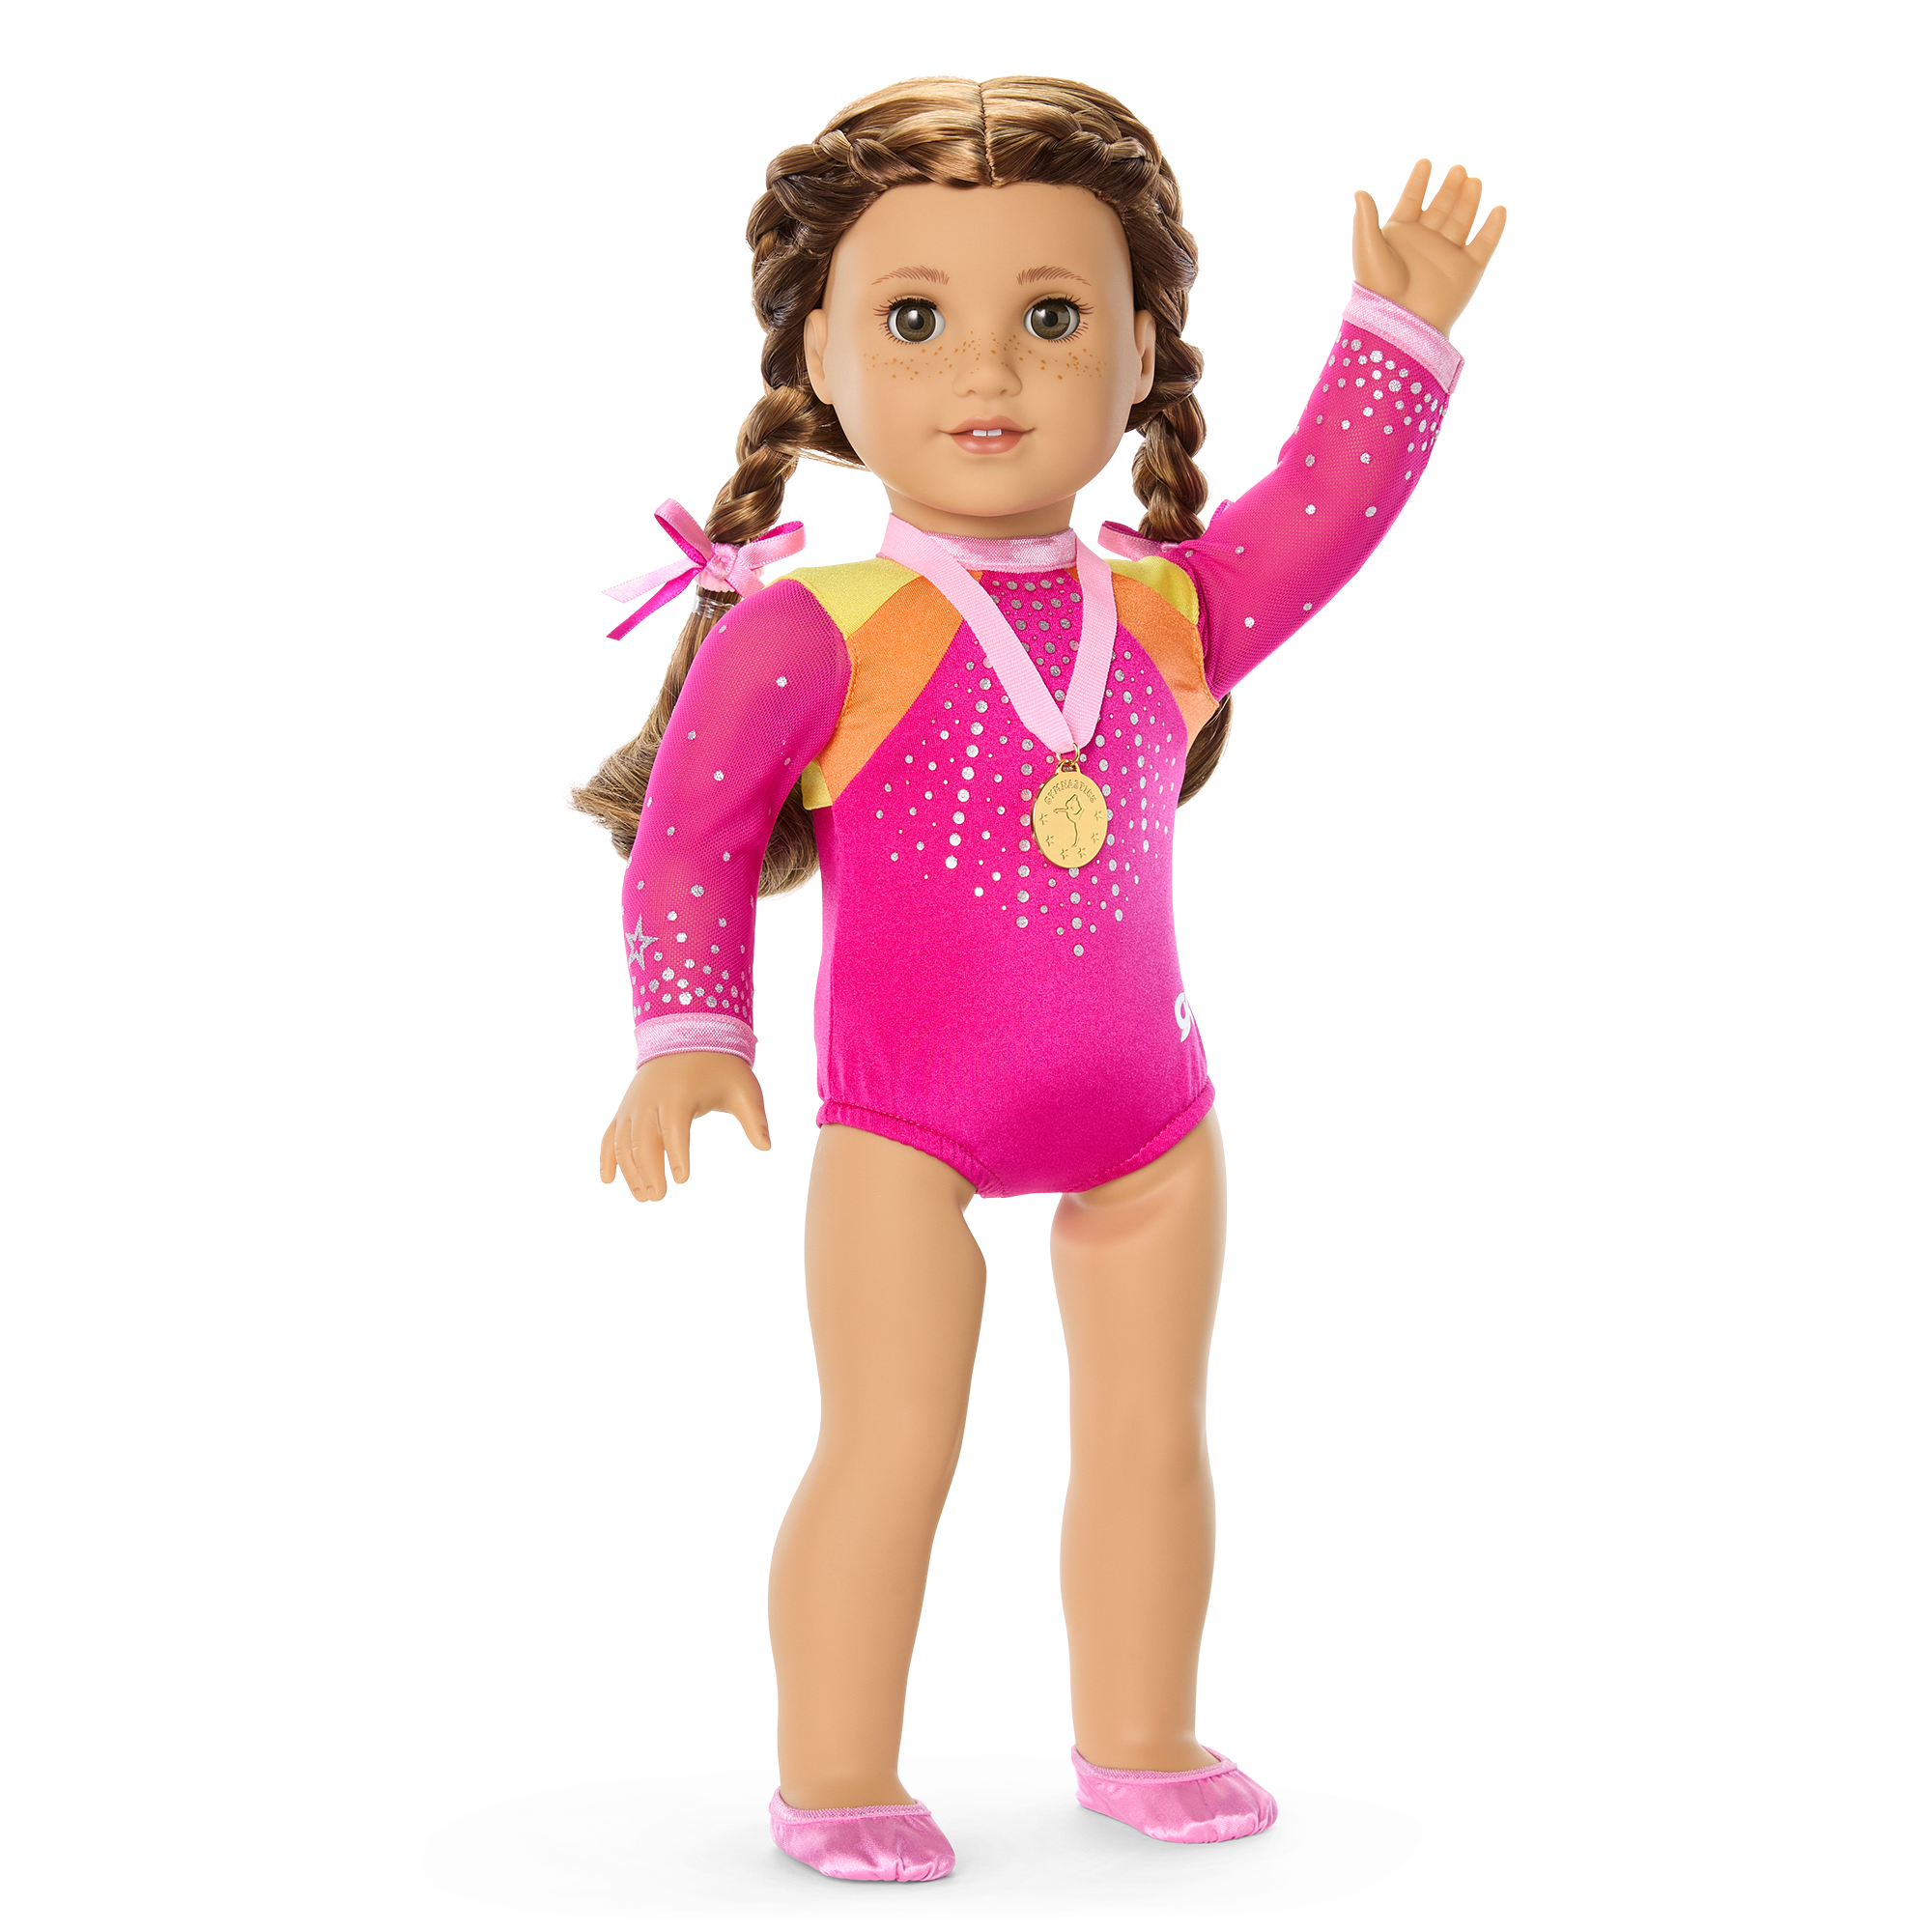 American Doll USA Olympics Gymnastics Outfit with Gymnastics Mat | 18-inch Doll